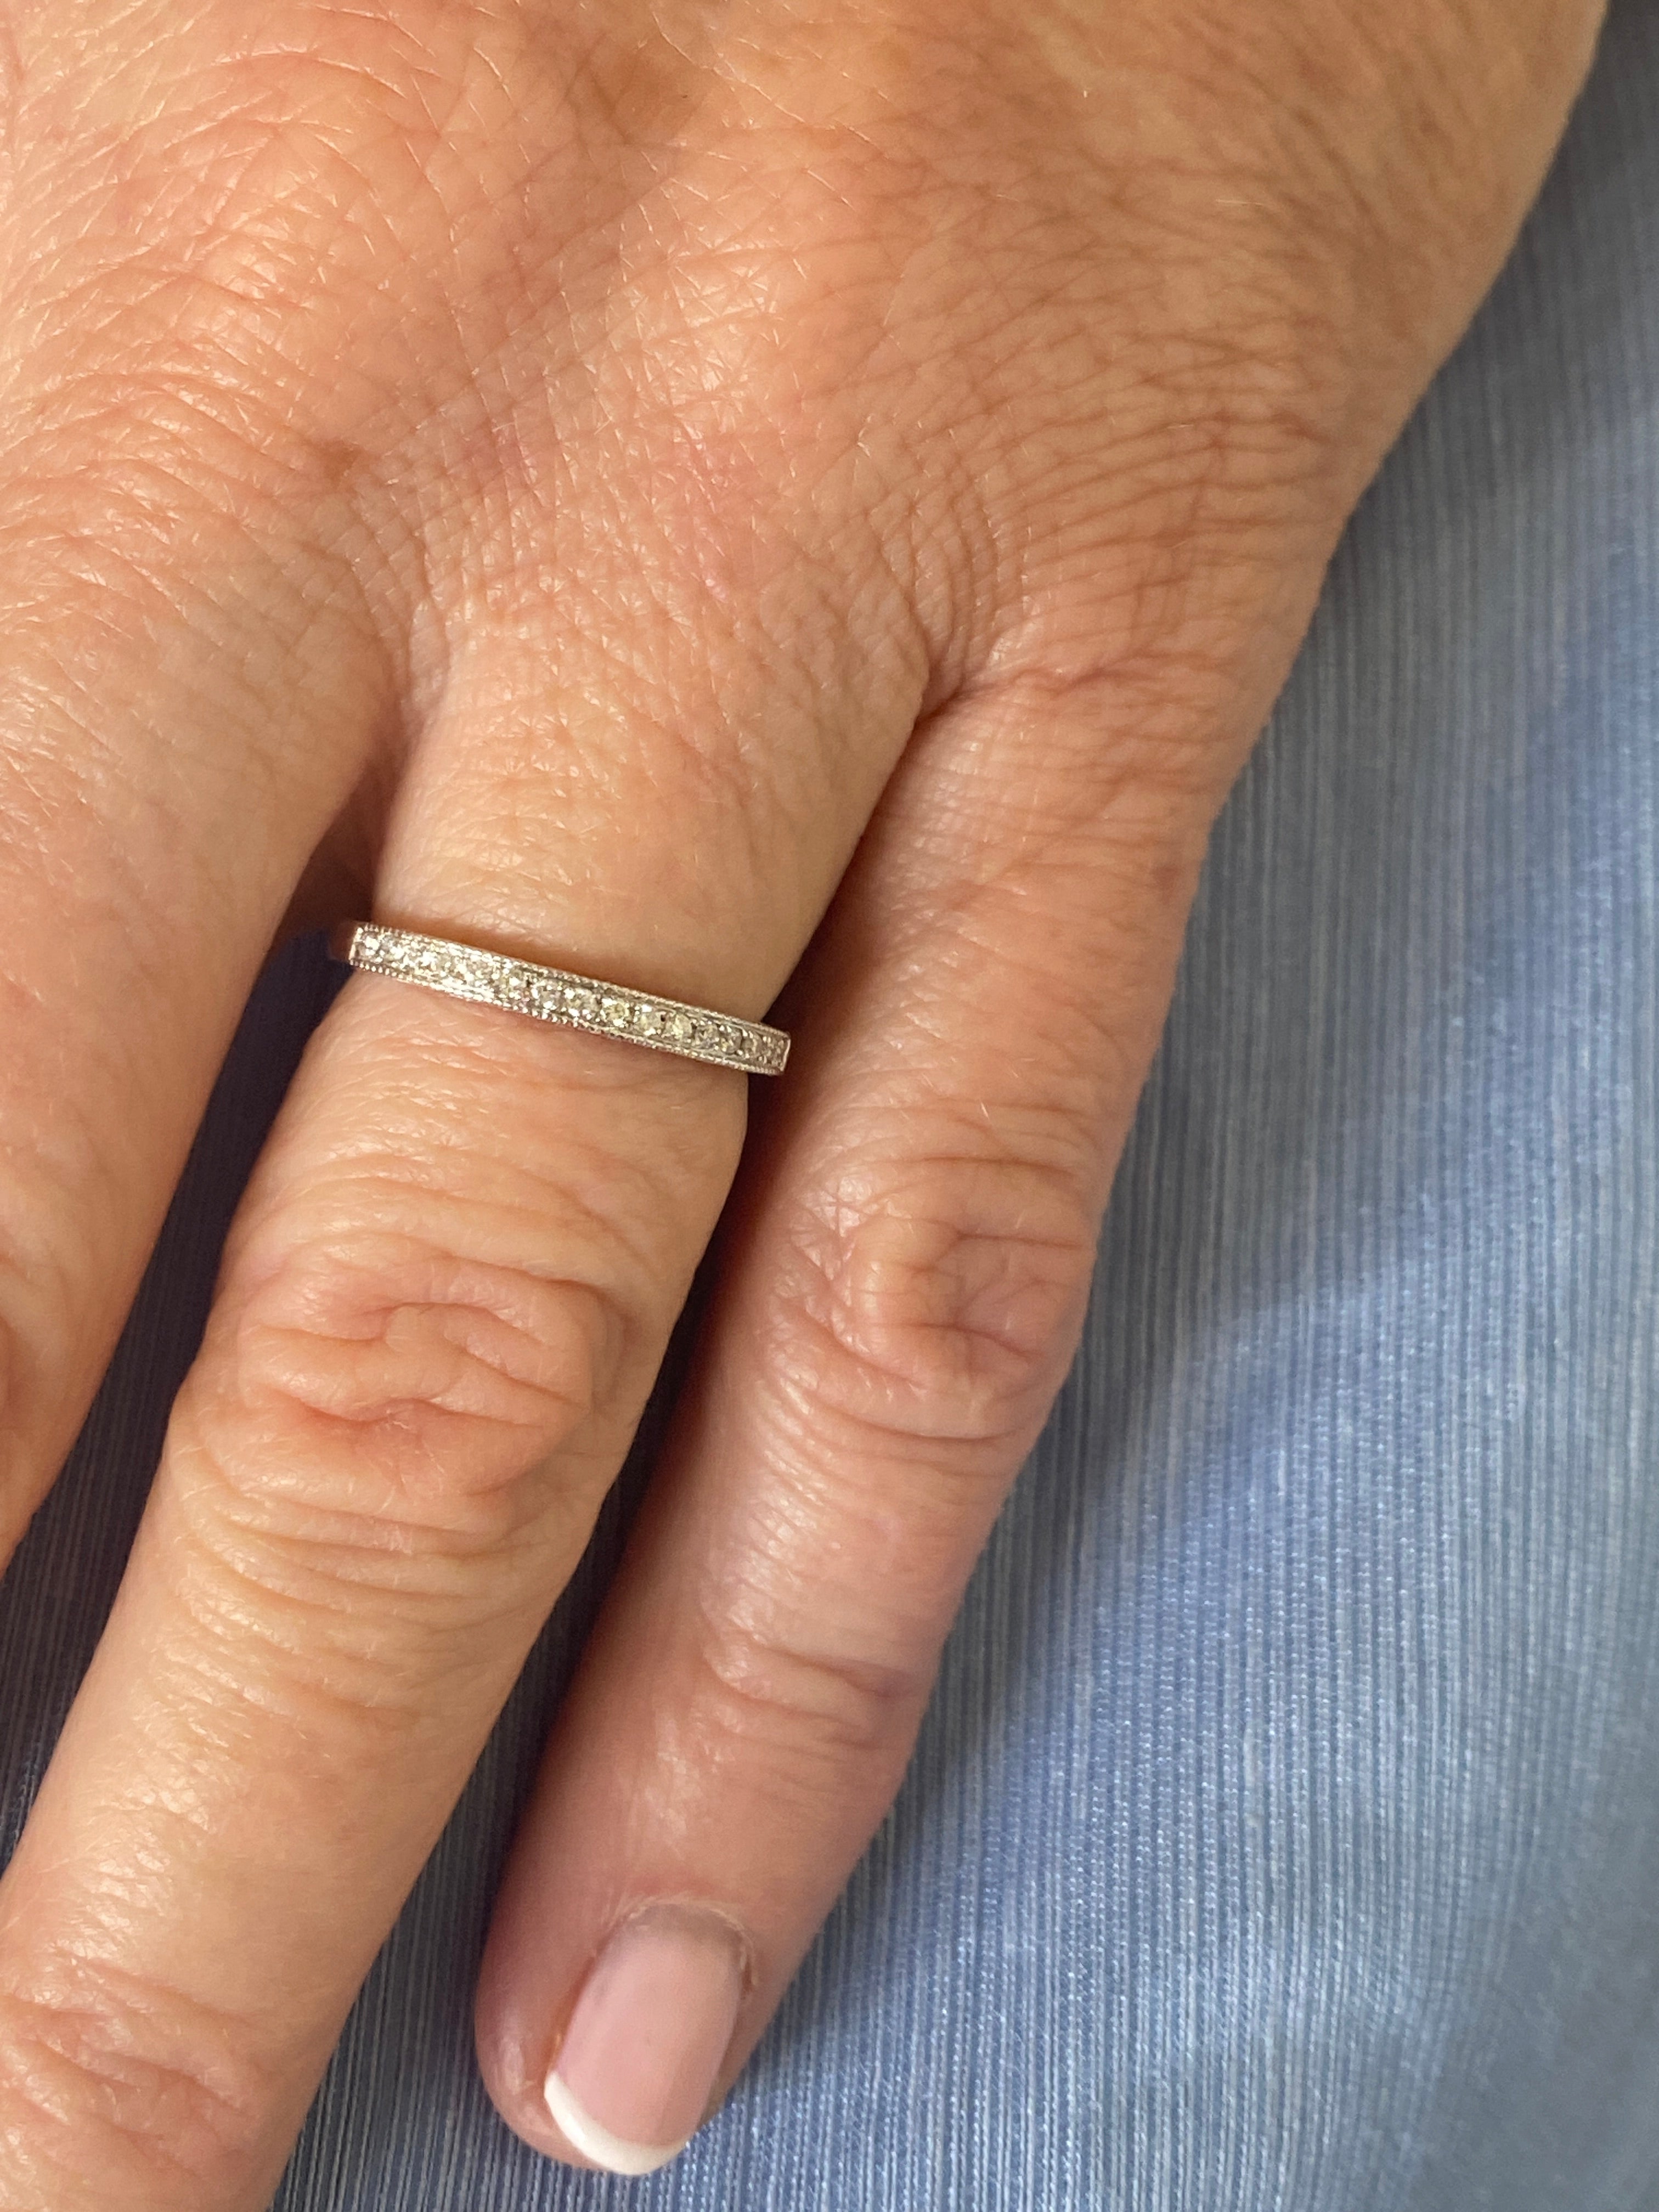 Diamond Wedding or Eternity Ring